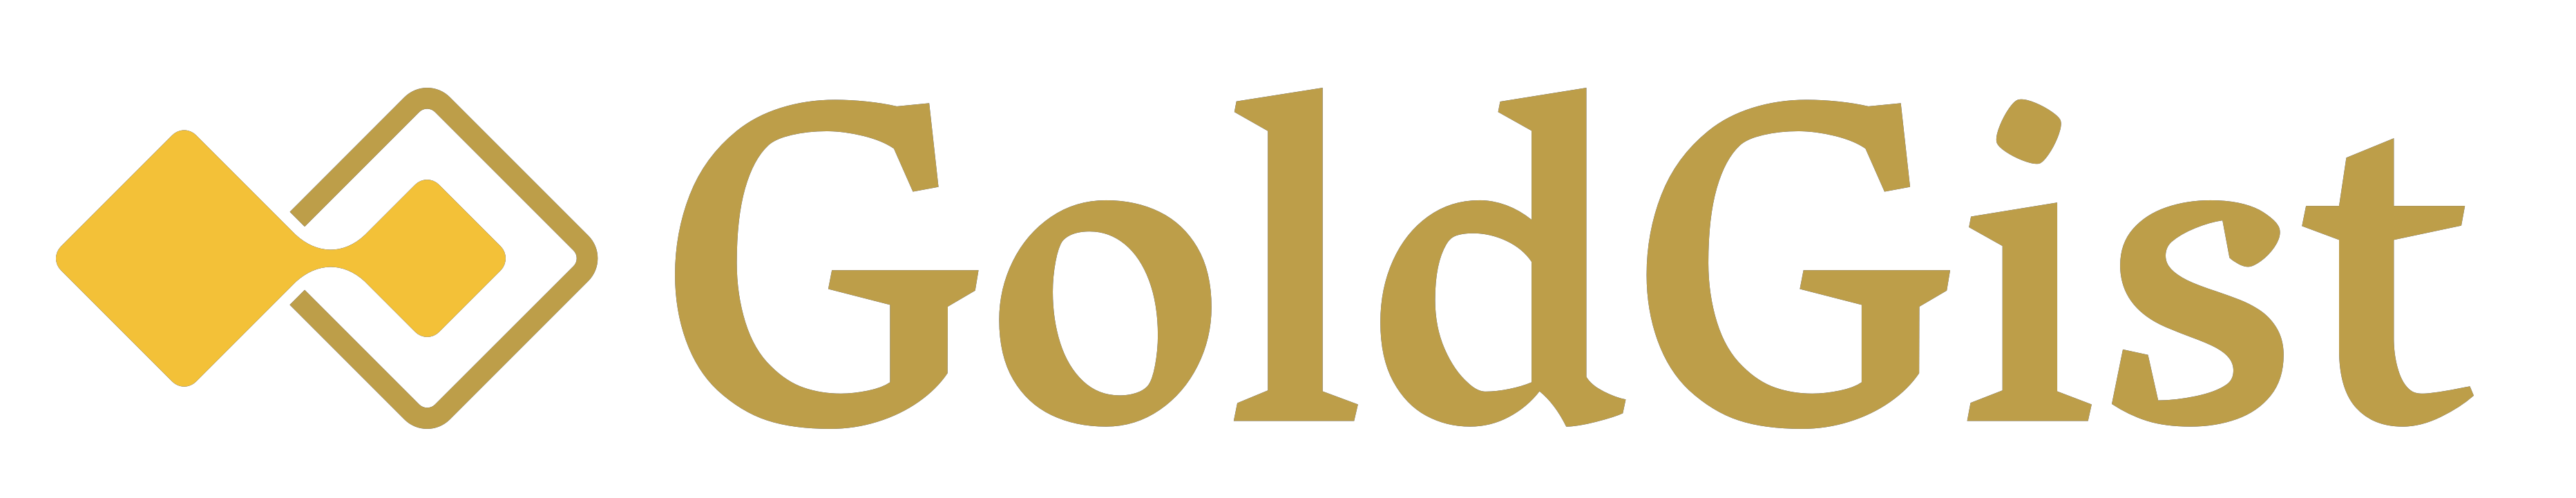 Goldgist Logo Original With Transparent Background